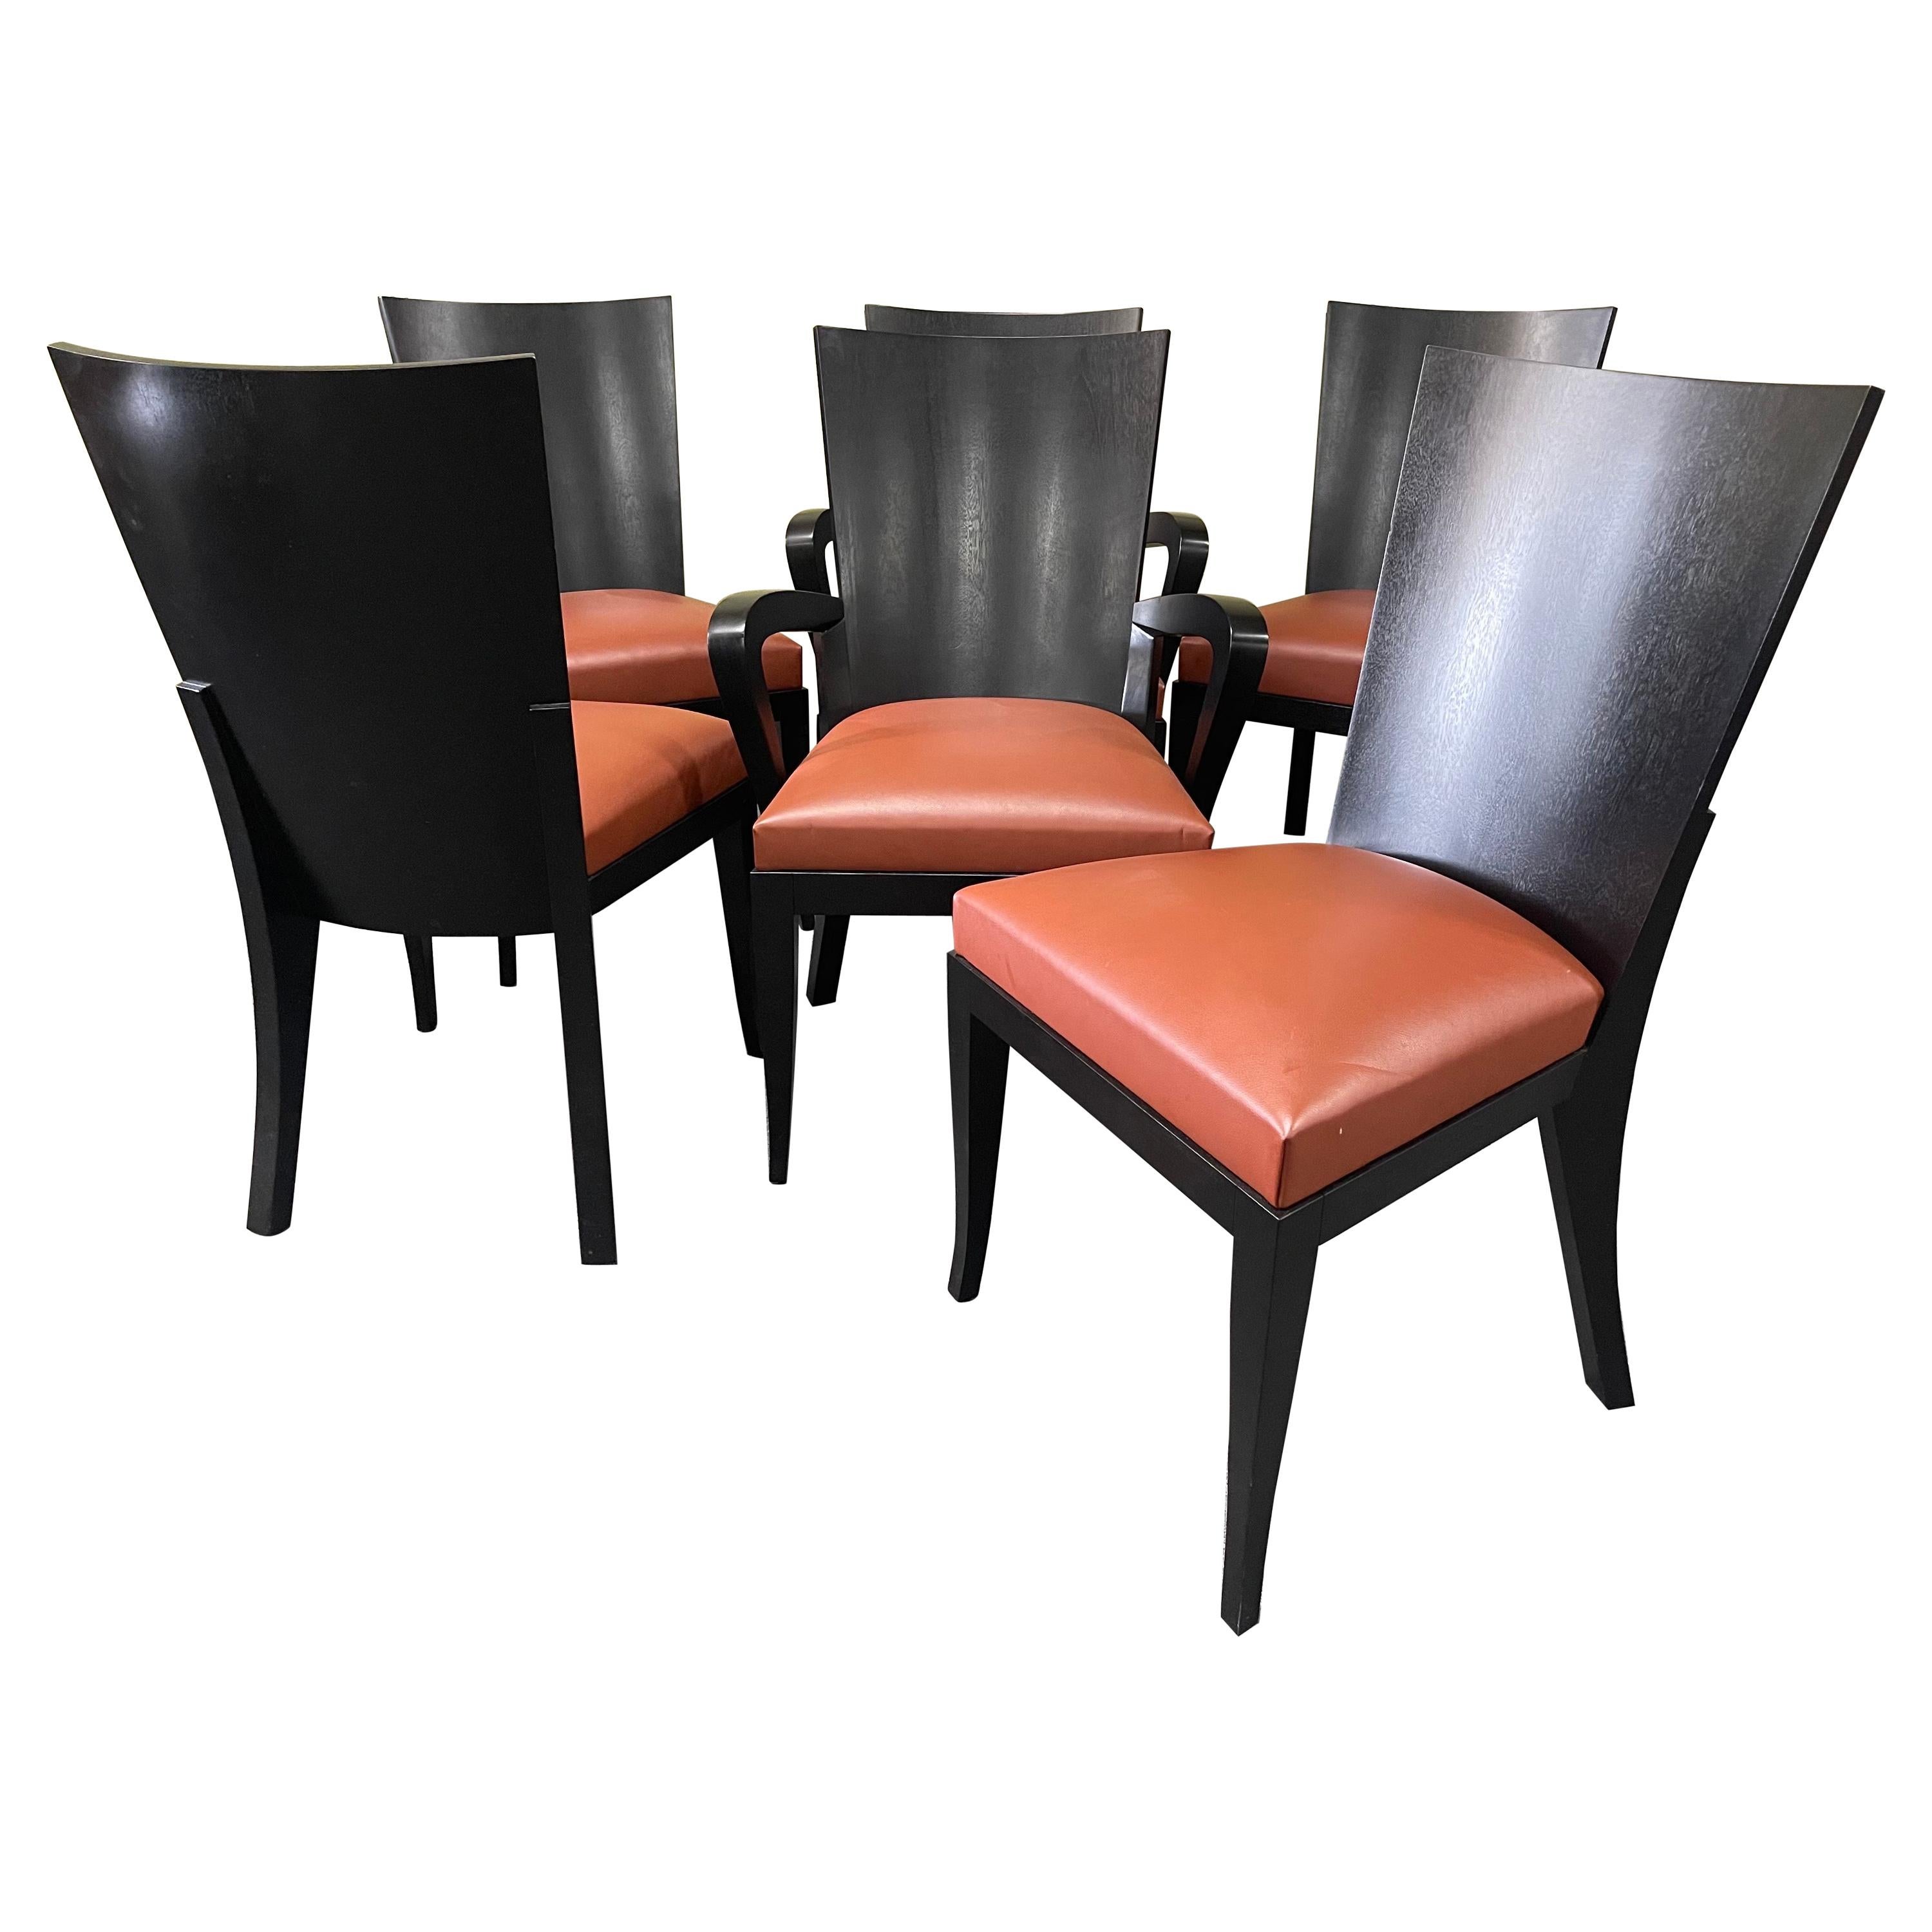 Set of Six "Cadette" Dining Chairs by Dakota Jackson